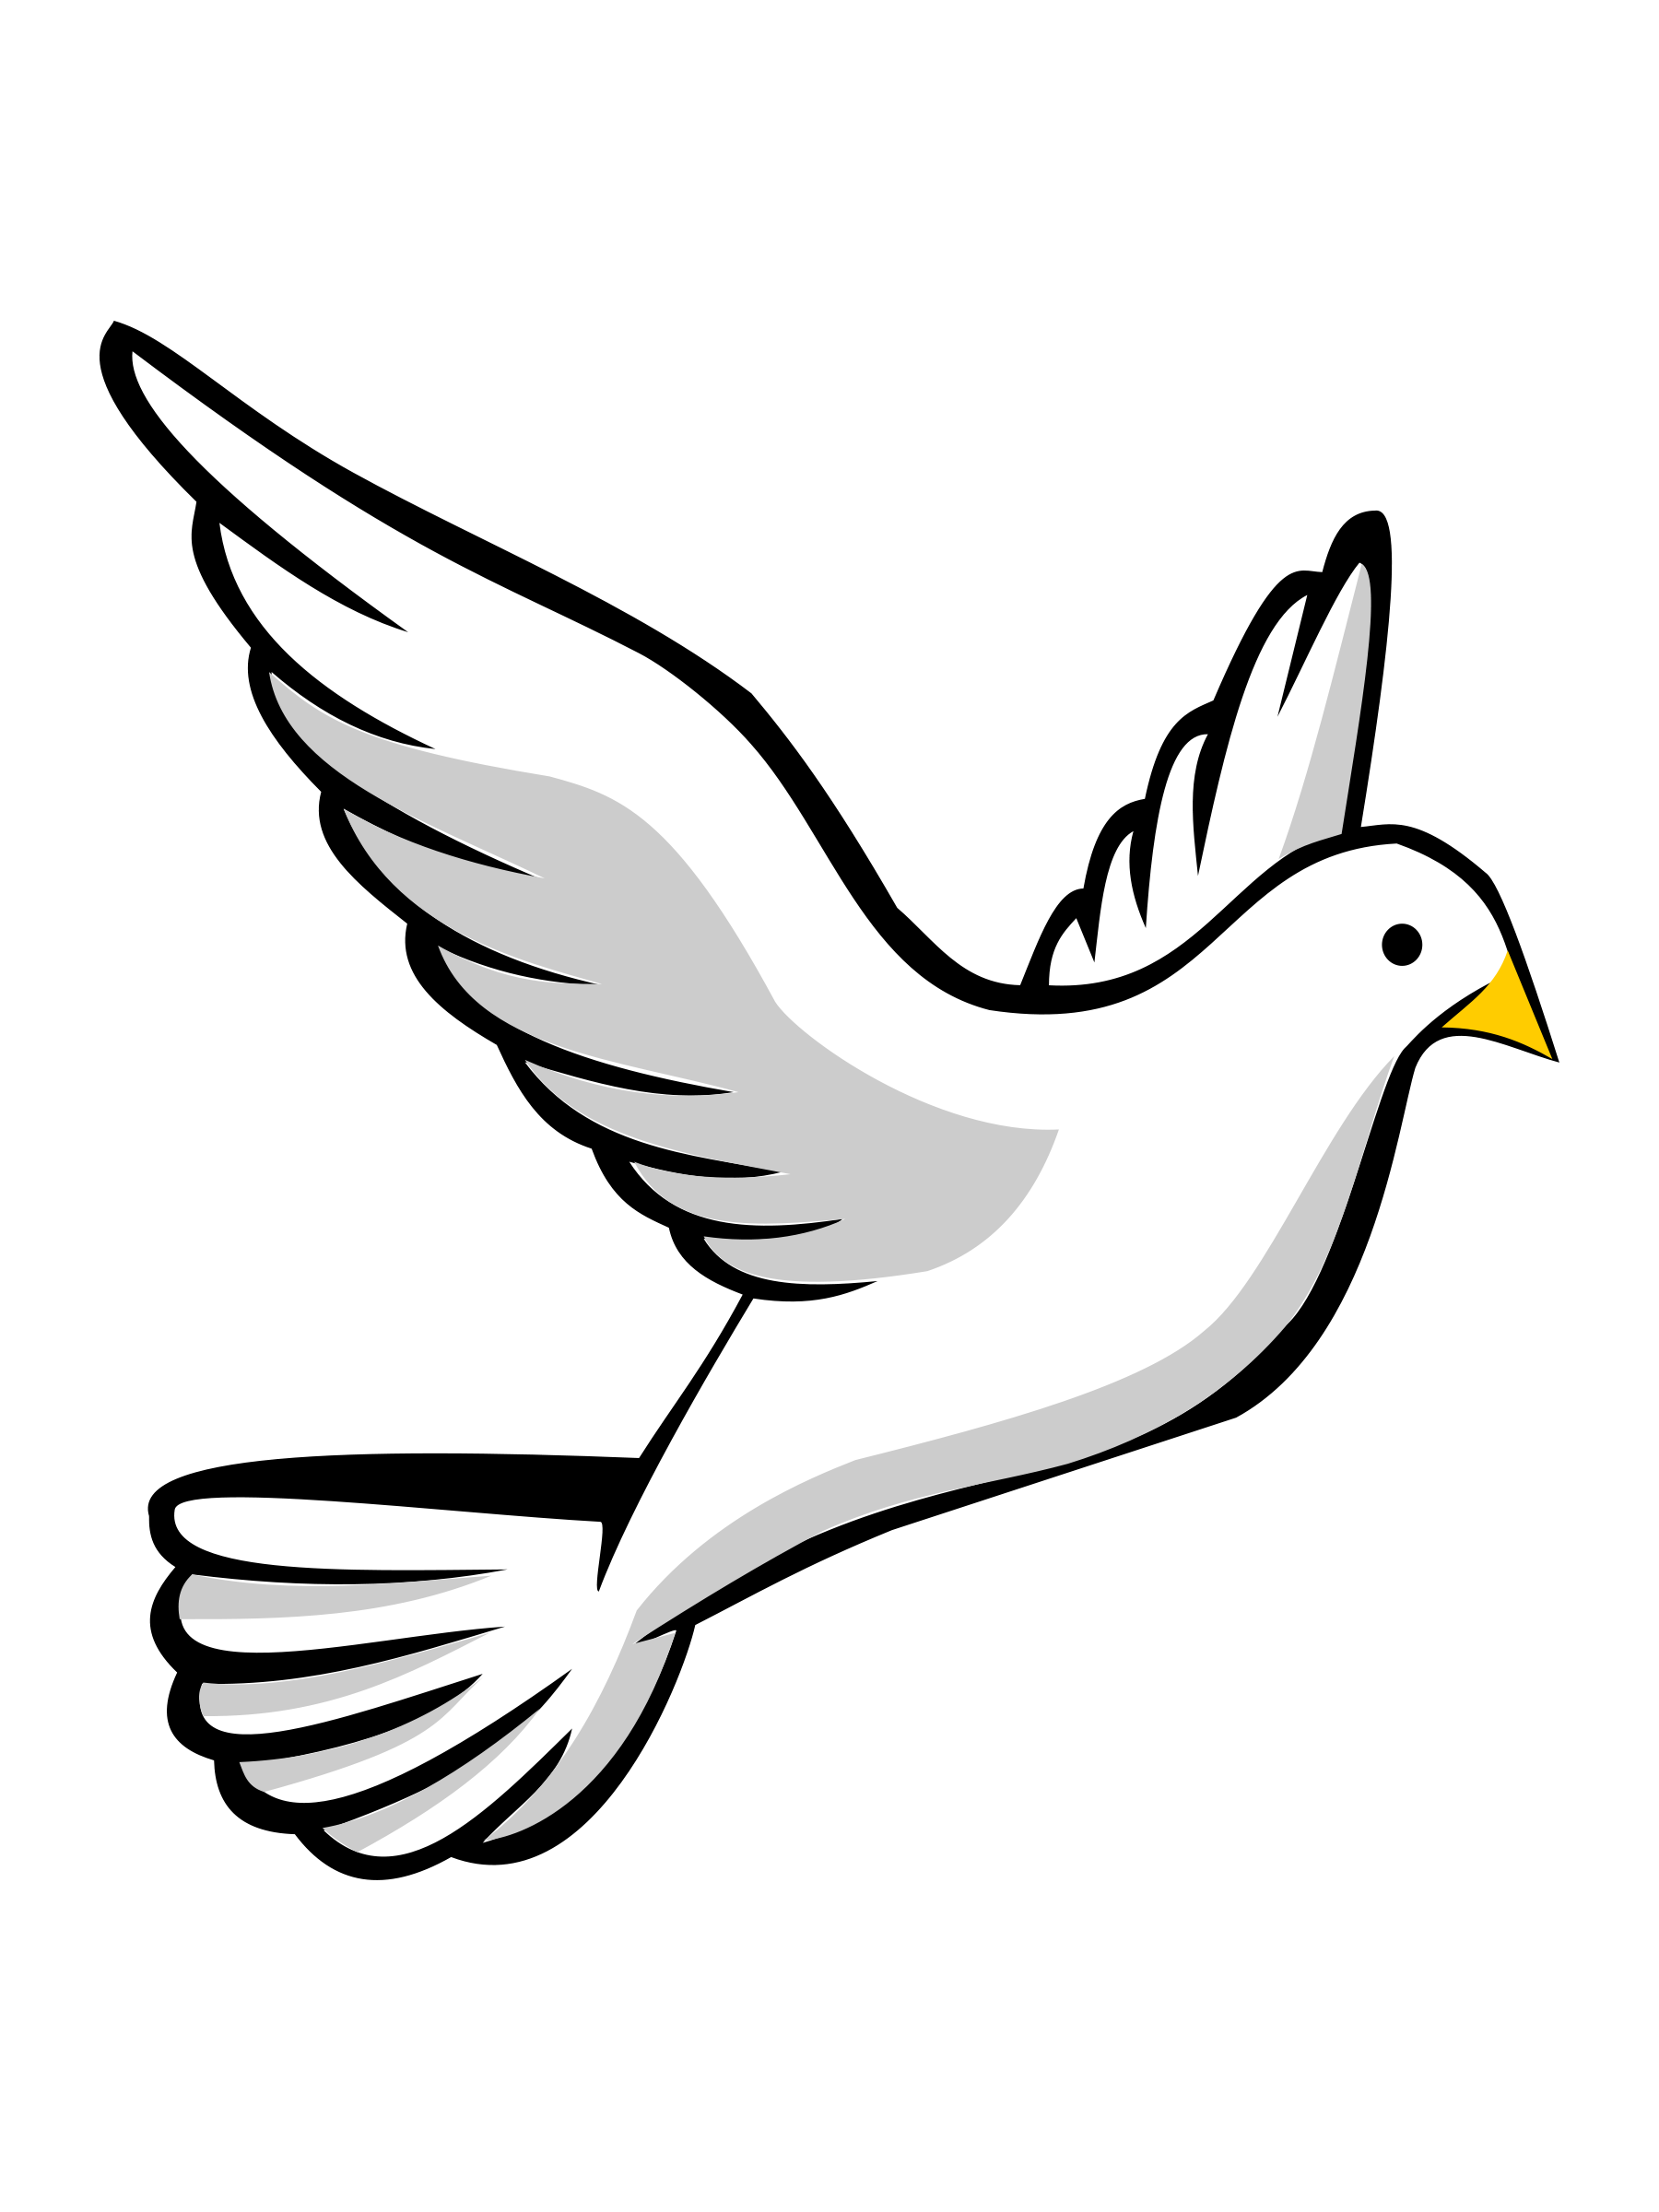 free dove clipart black and white - photo #35